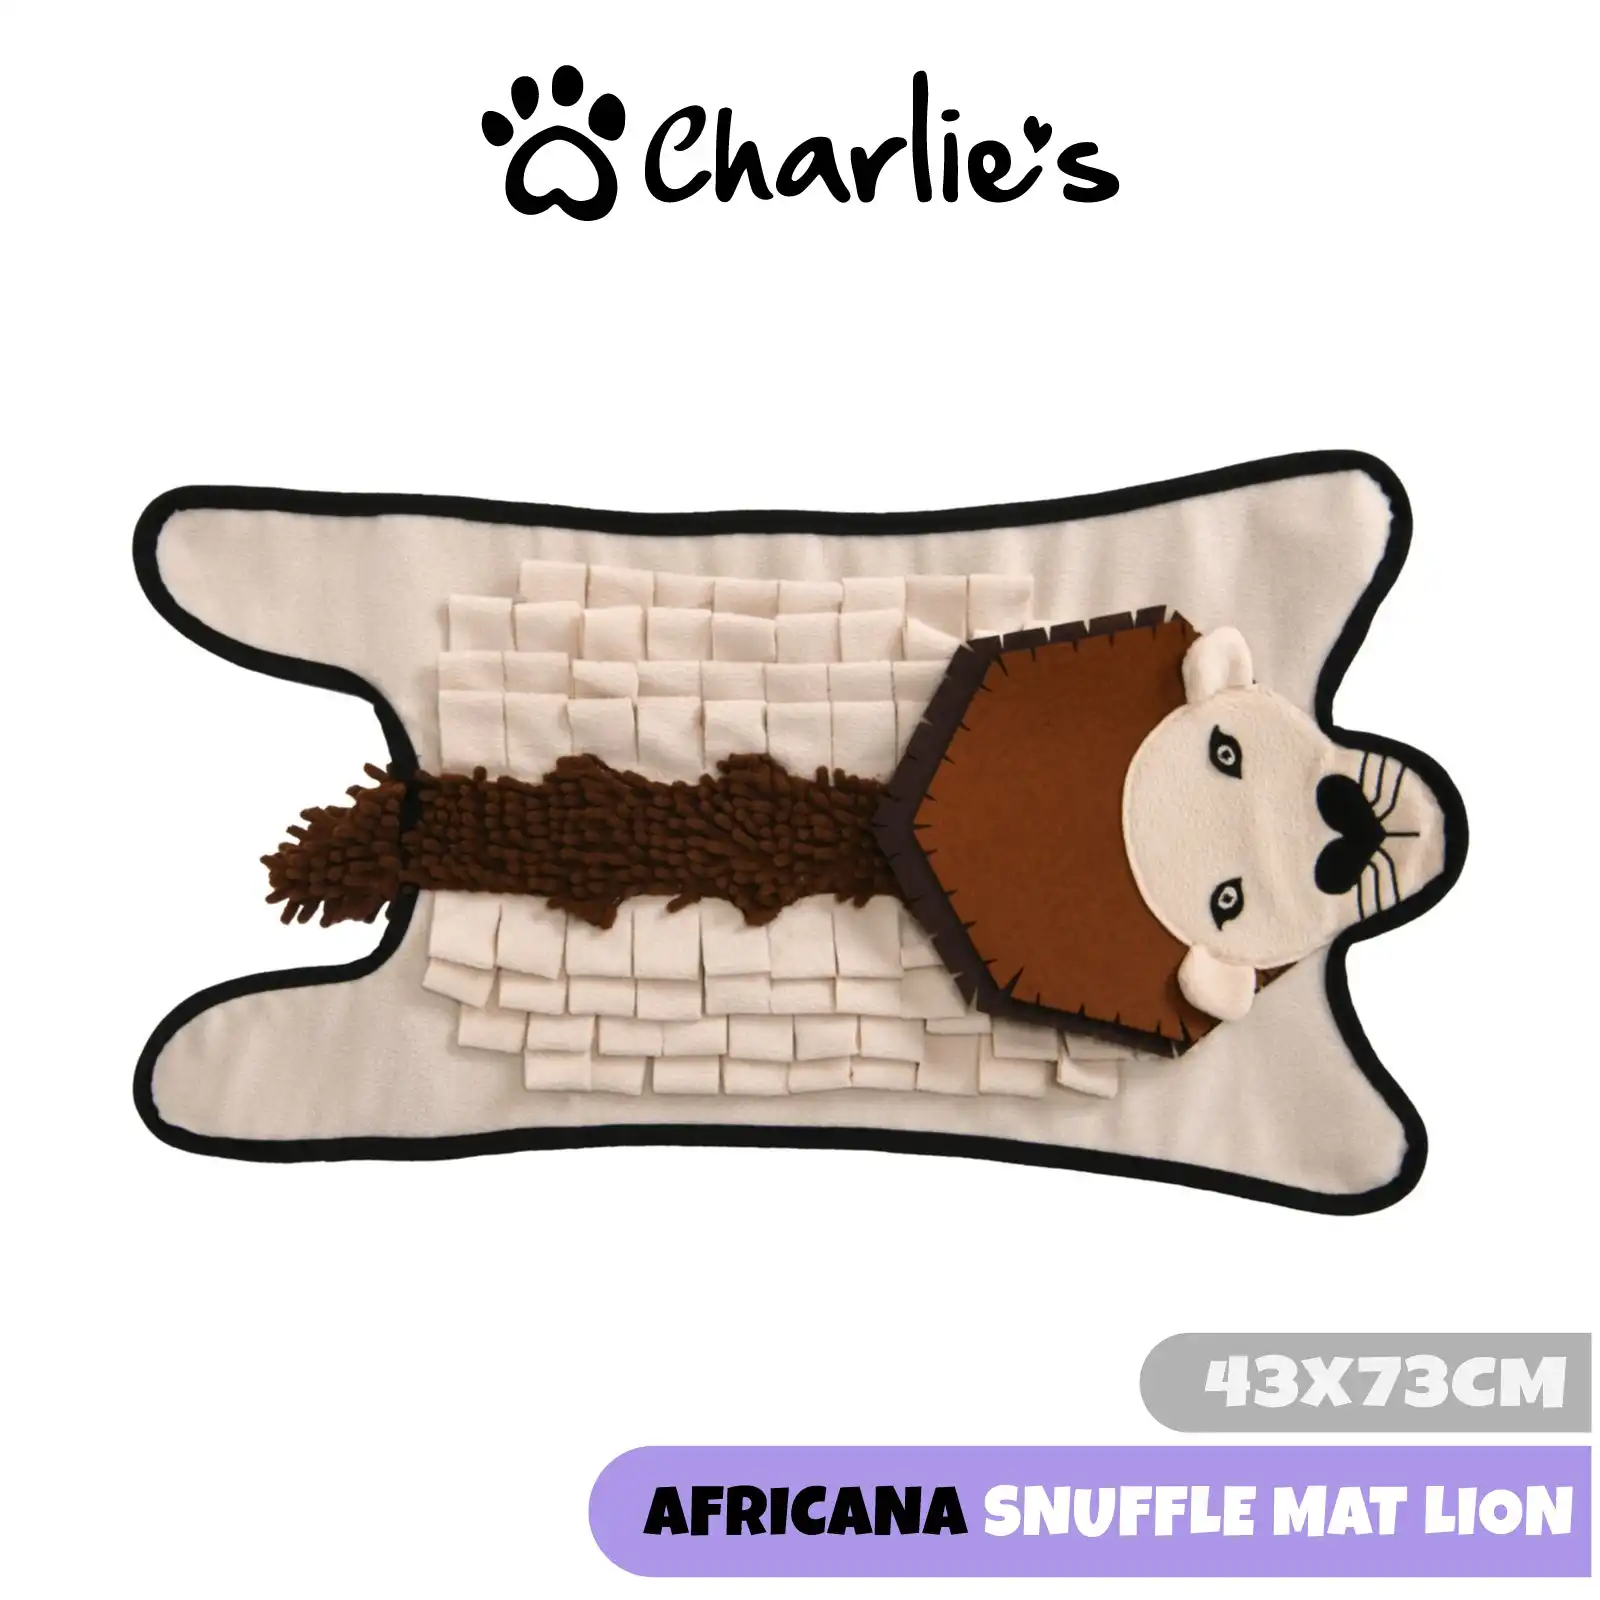 Charlie's Africana Snuffle Mat Lion 43x73cm